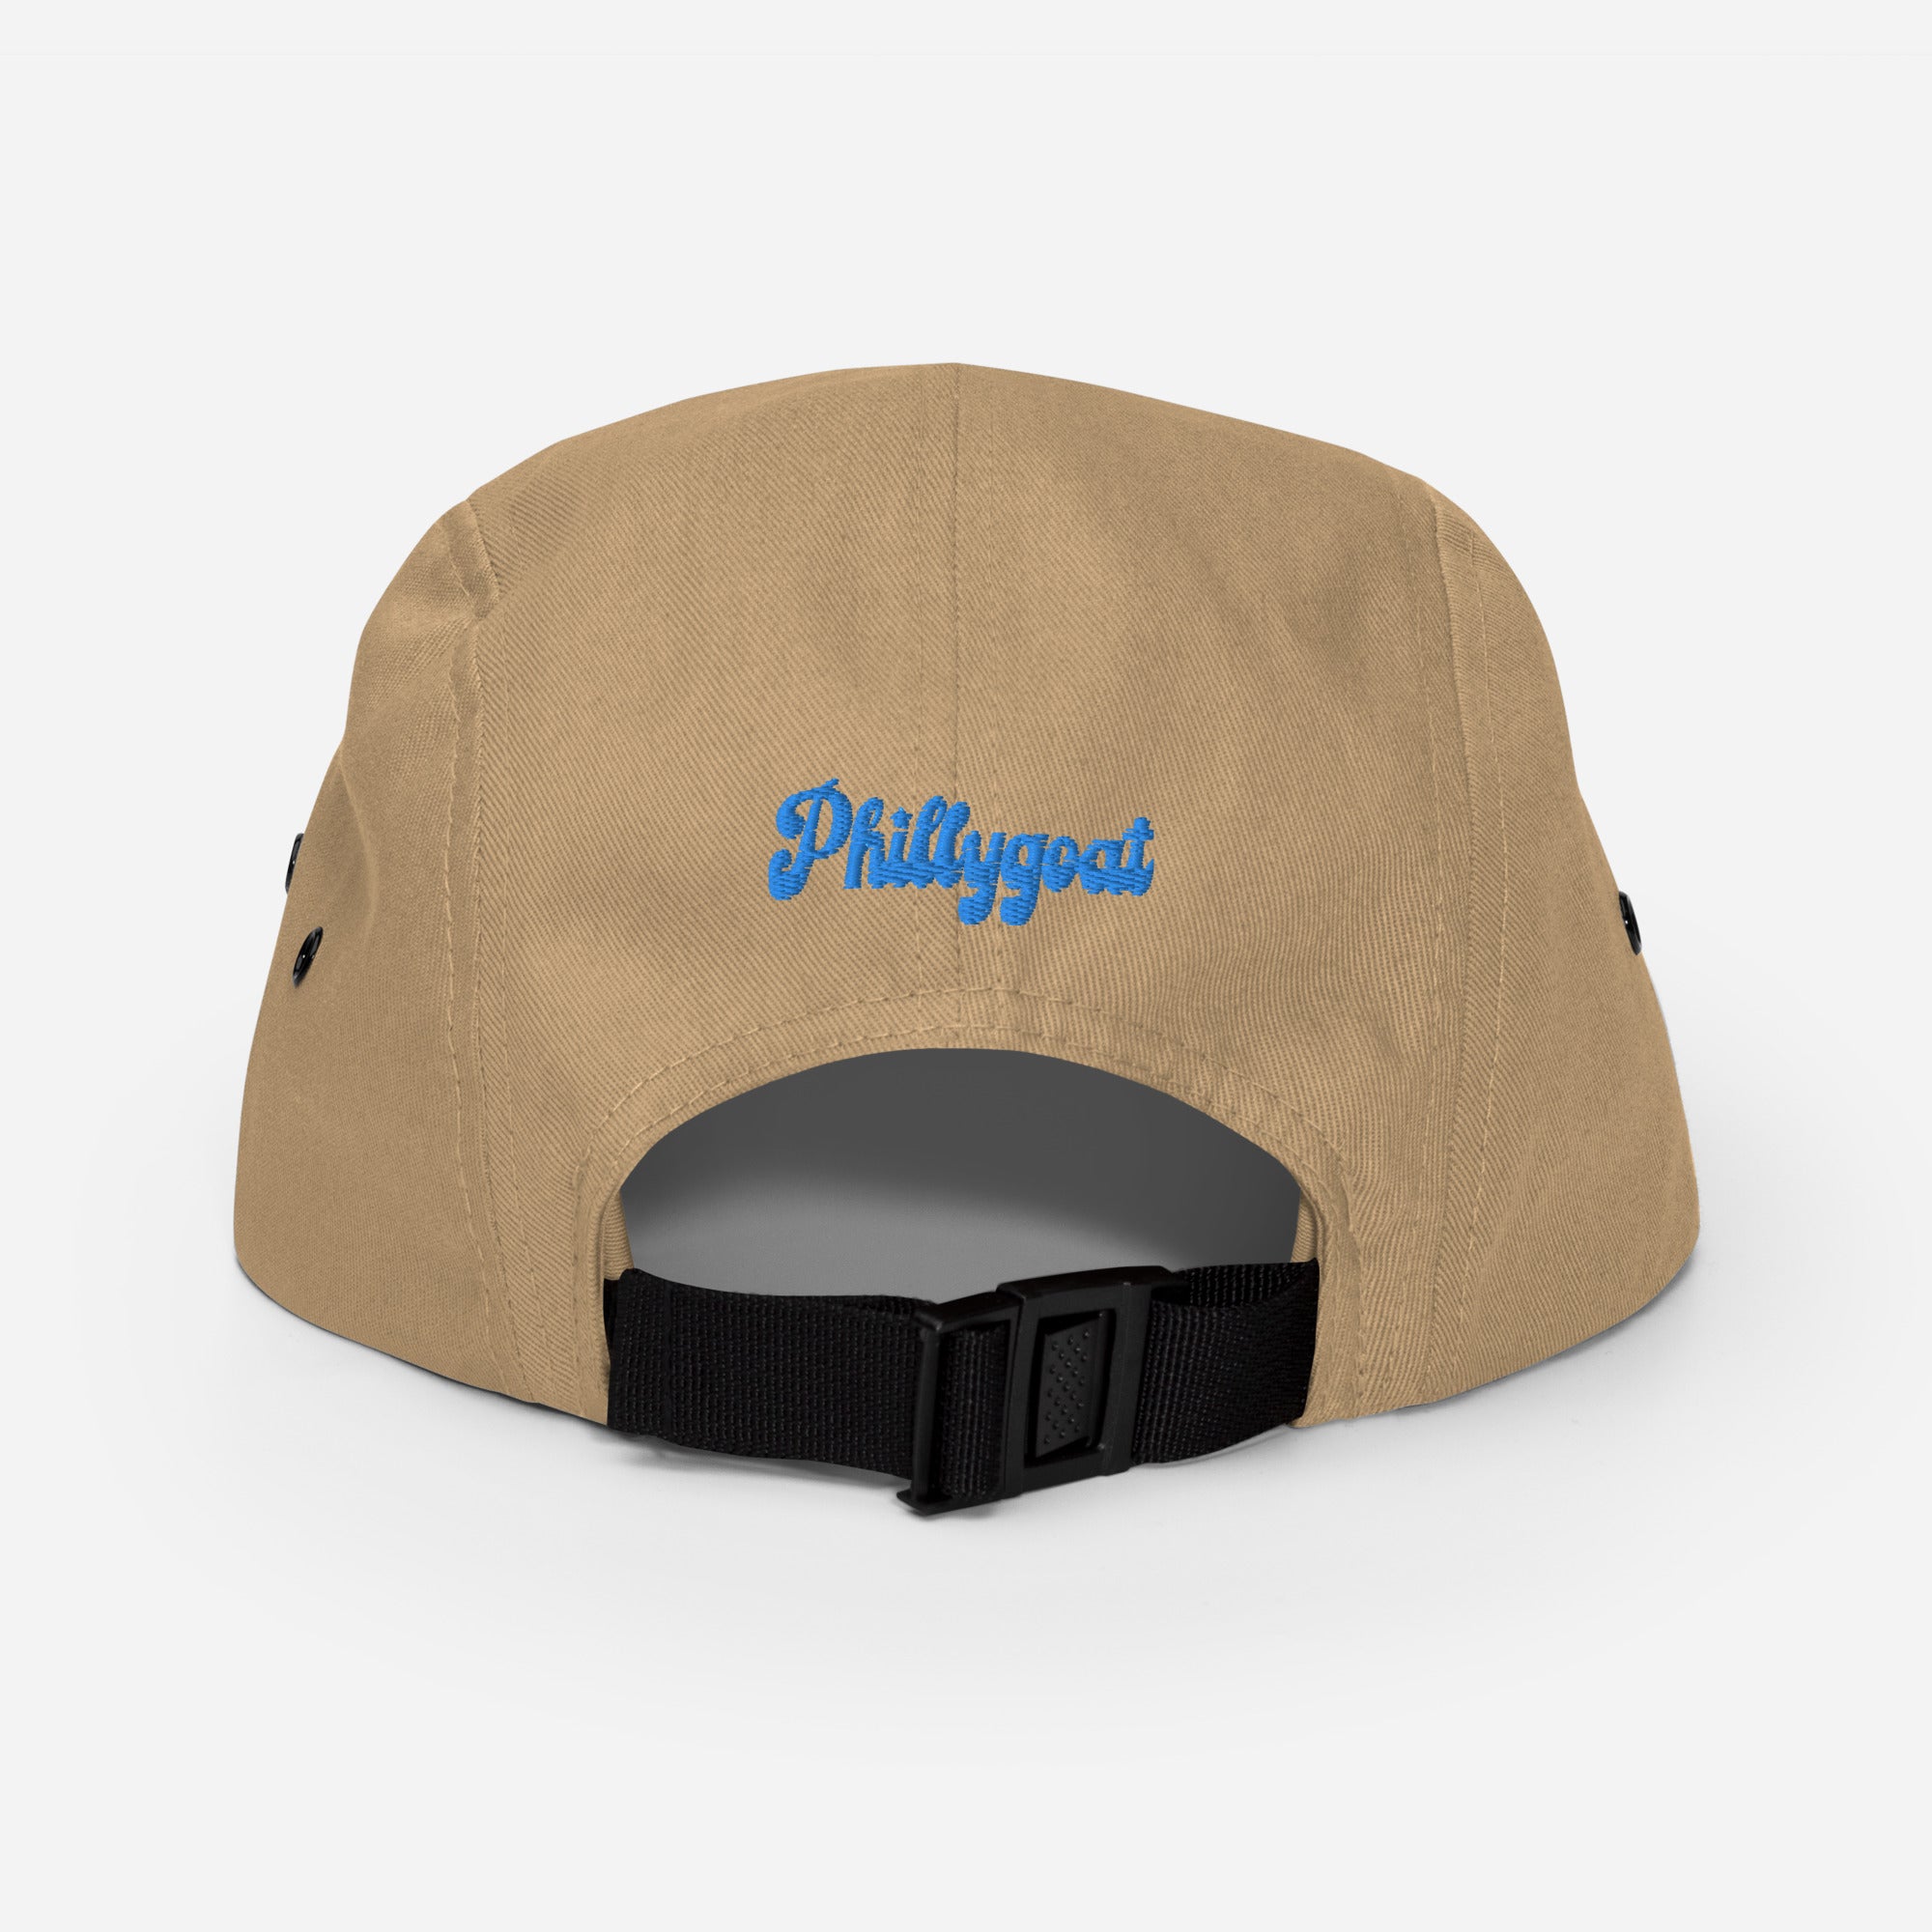 "🐍 Philly Soccer 🐍" 5-Panel Camper Hat